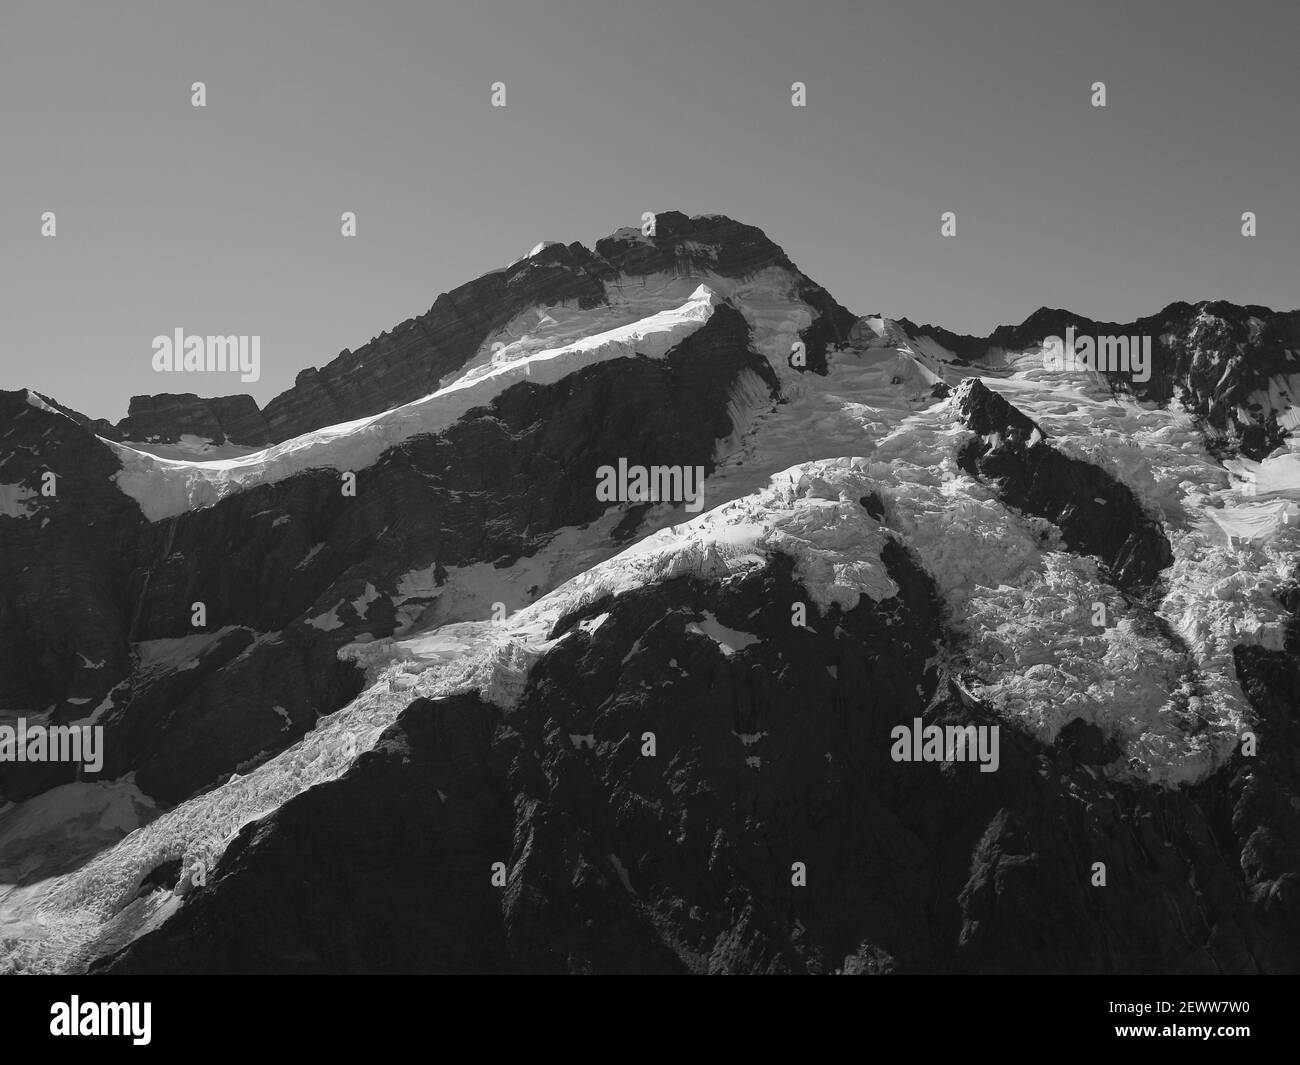 Monochrome image of Mount Sefton. Stock Photo